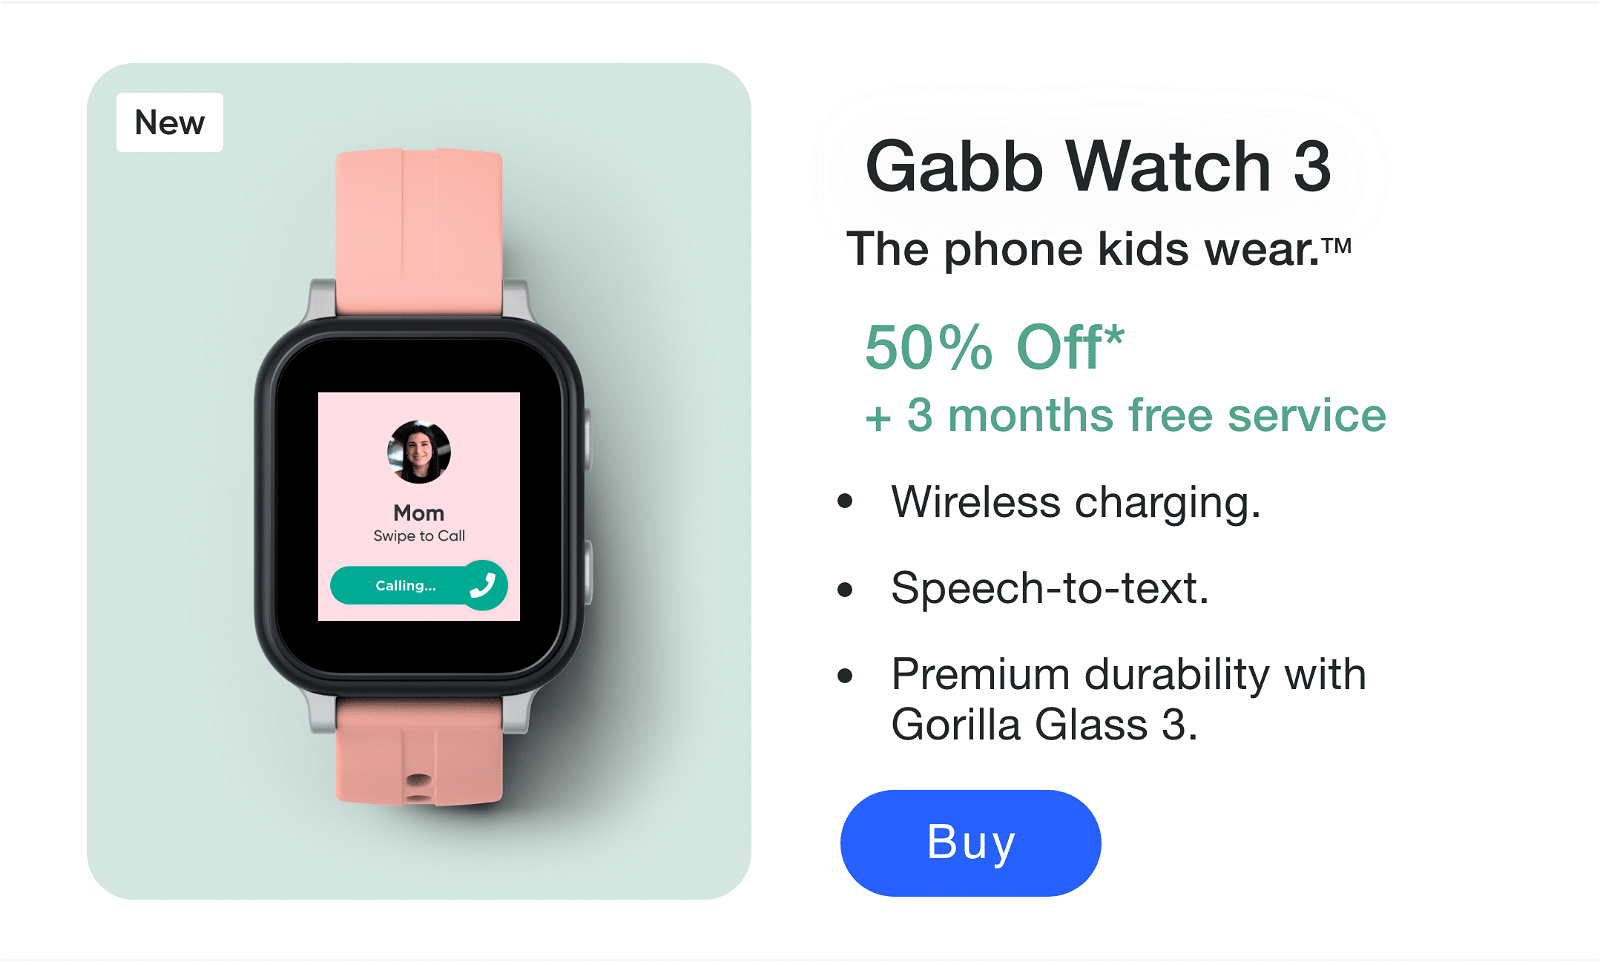 Gabb Watch 3